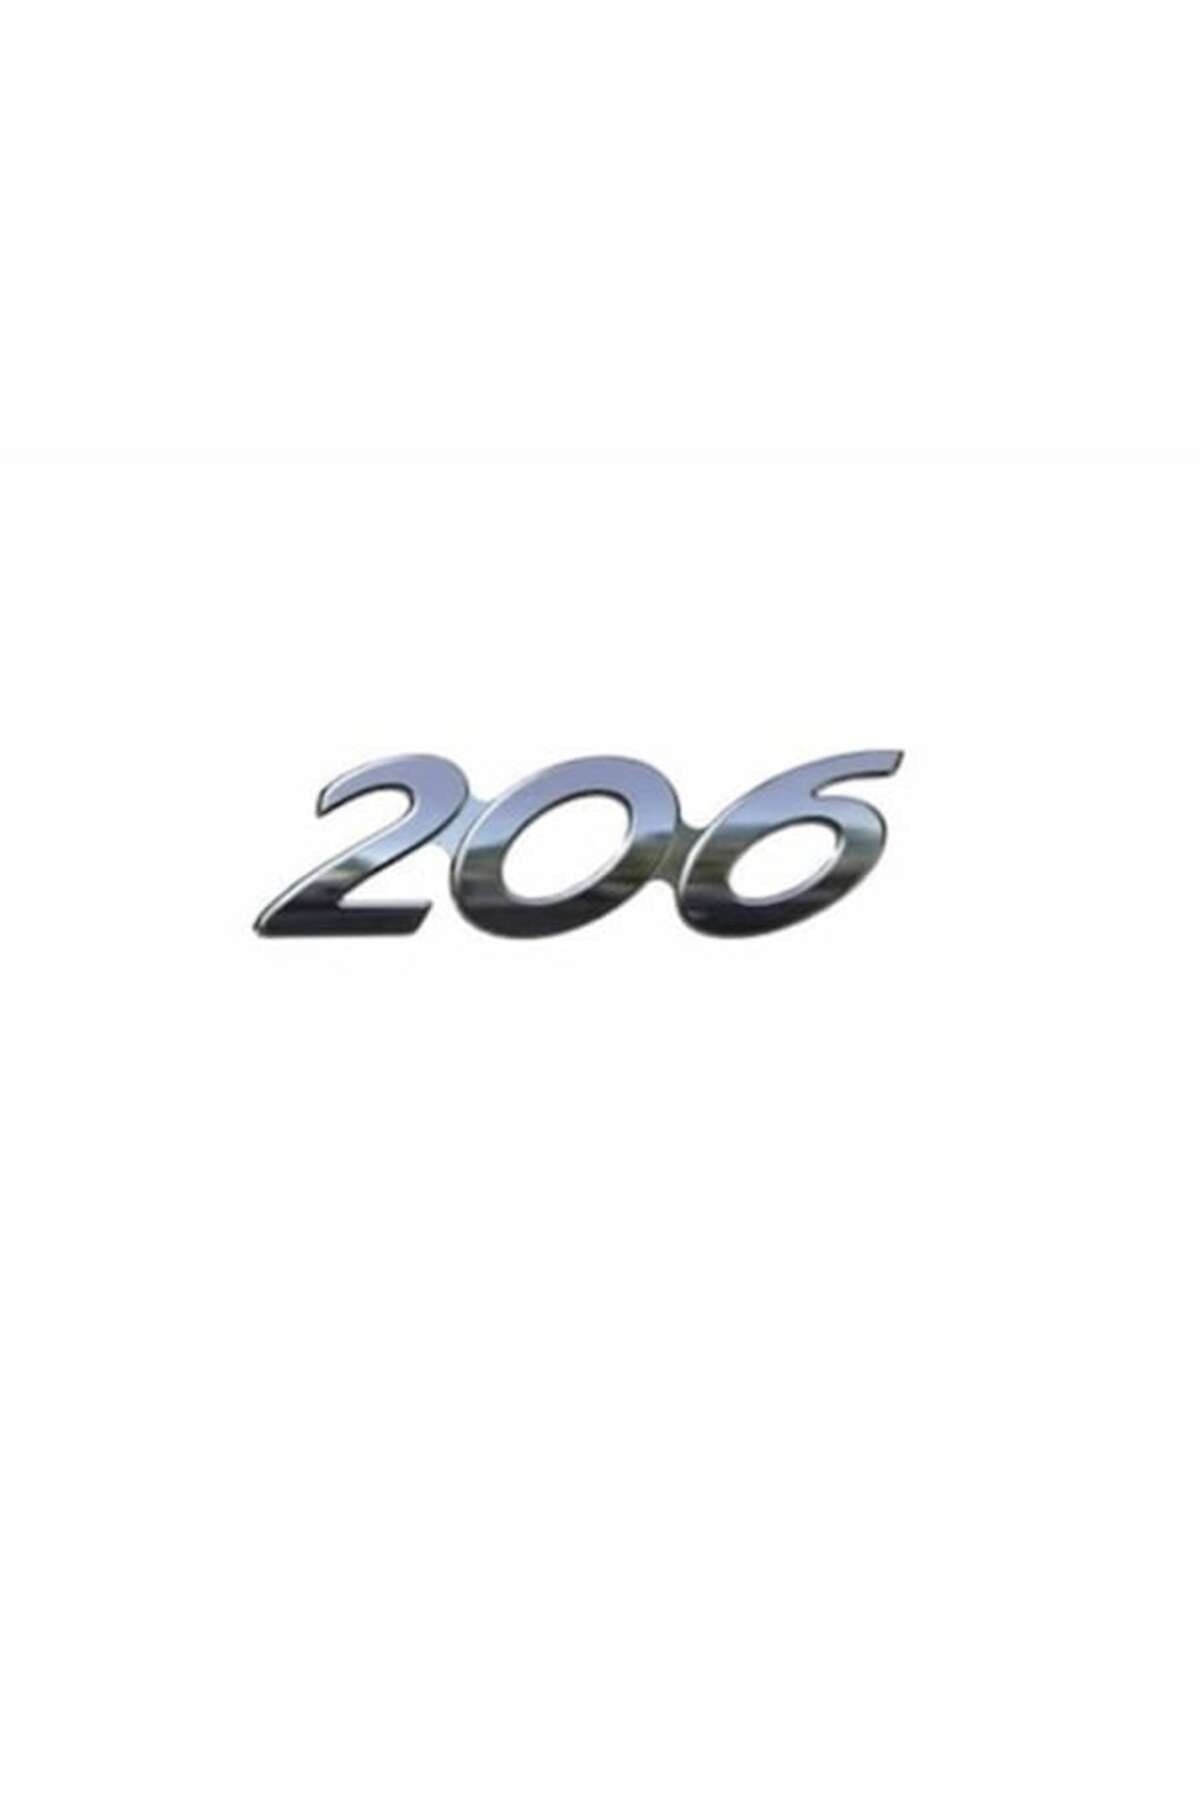 EDEXPORT Peugeot 206 Arka 206 Yazisi -Aslan Armasi Ve Peugeot Yazisi Set 387277985